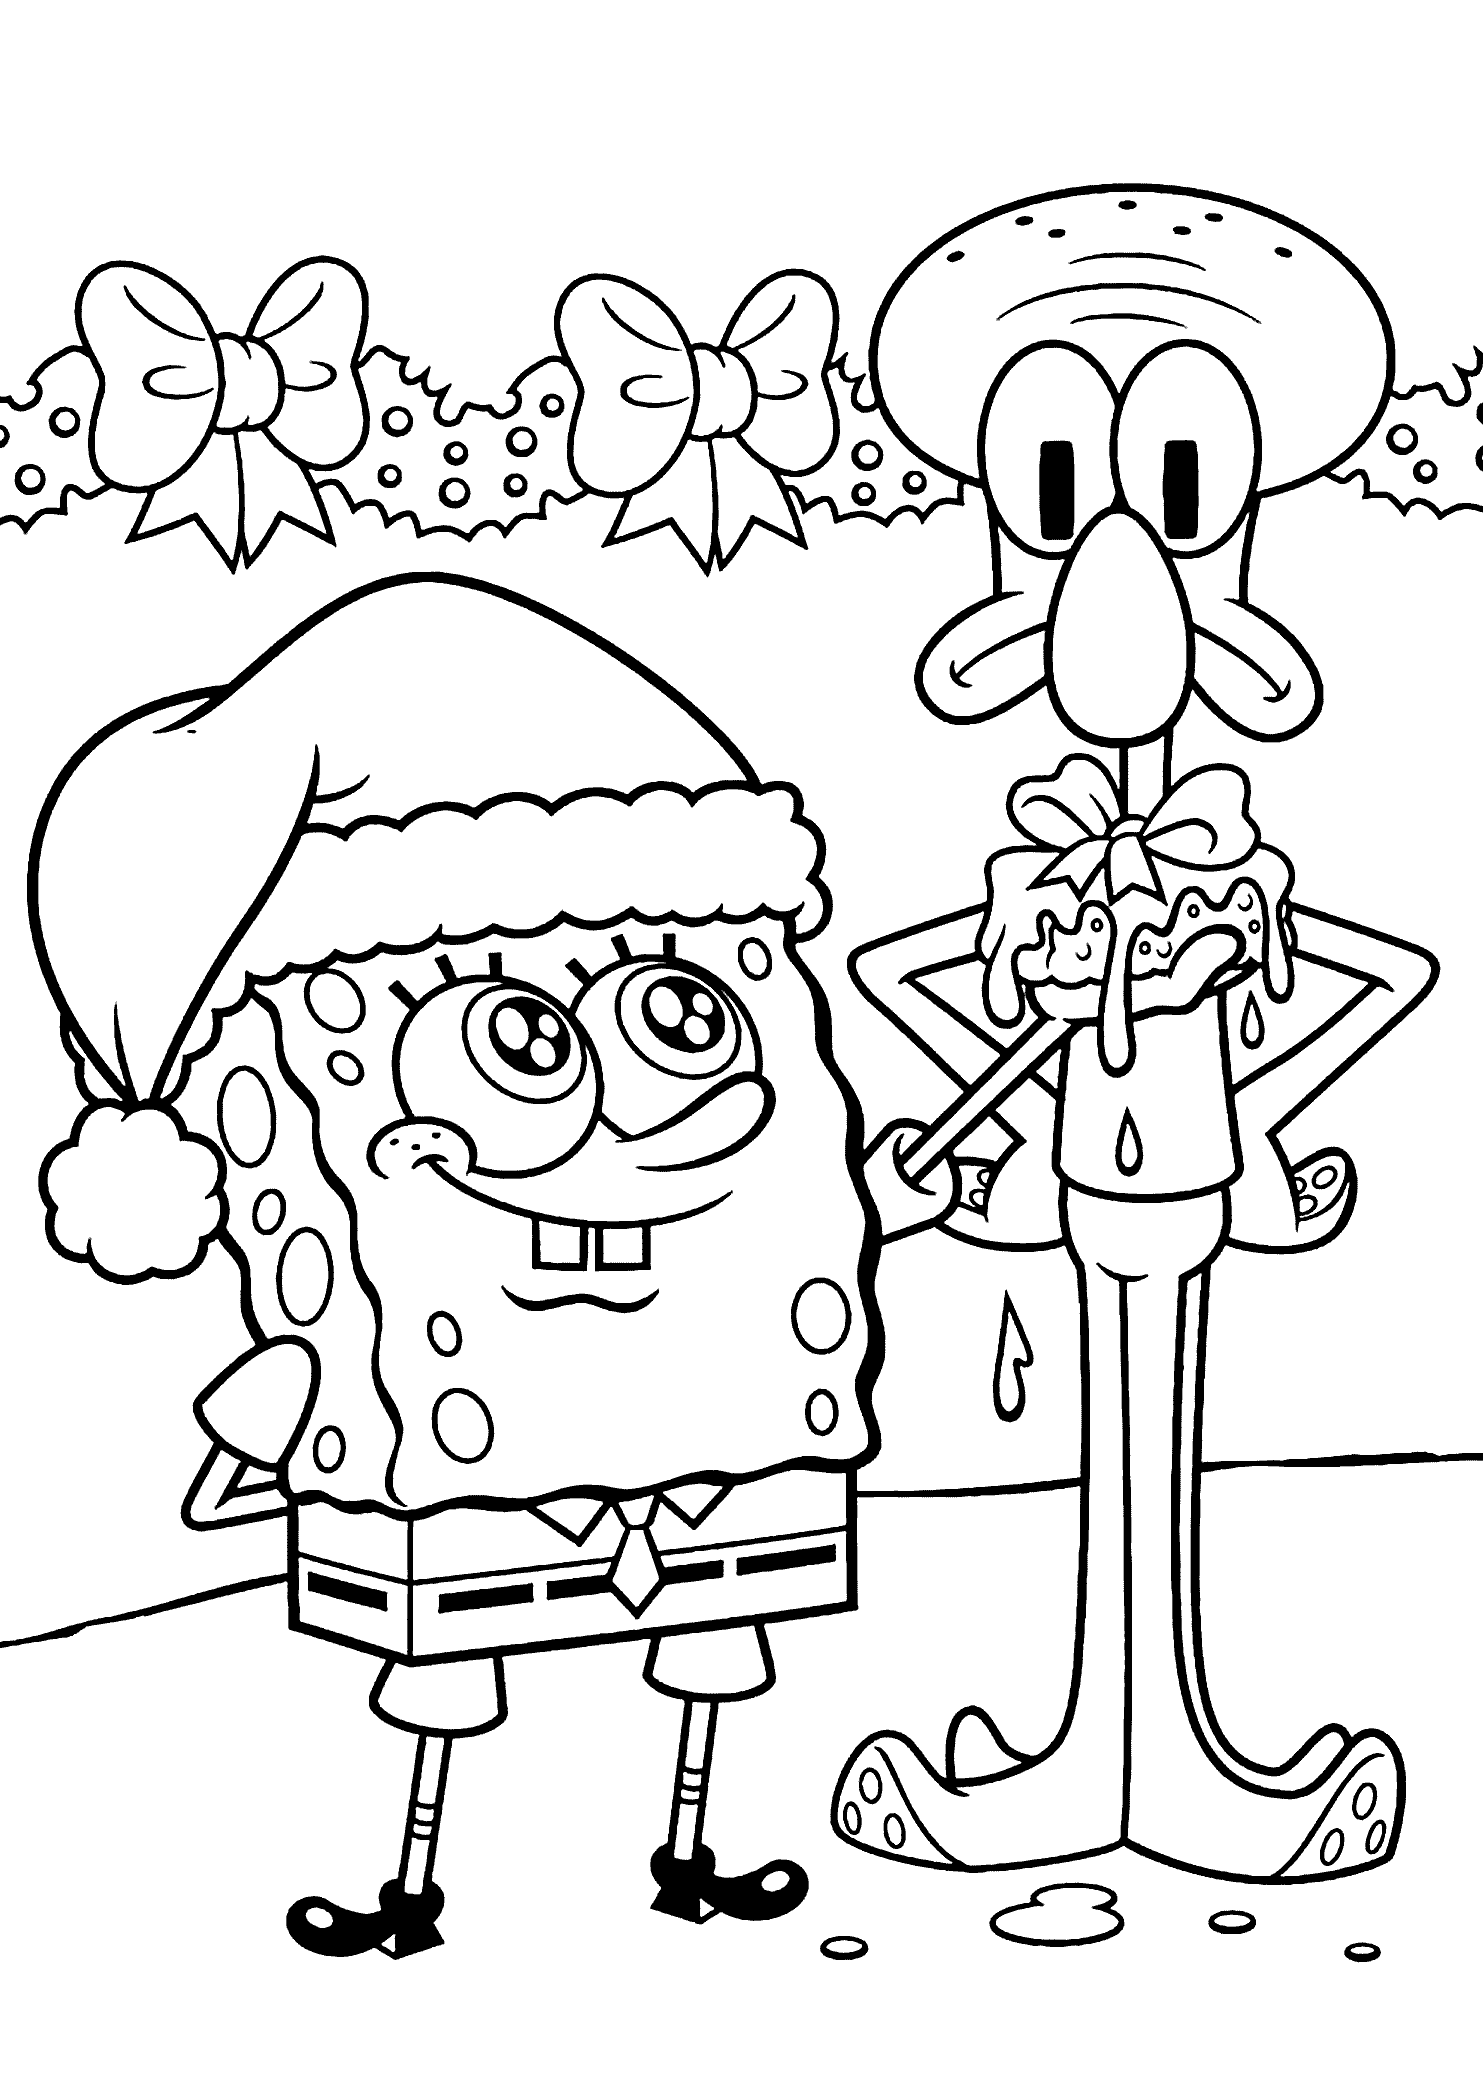 Spongebob Christmas Coloring Pages Free Printable ...